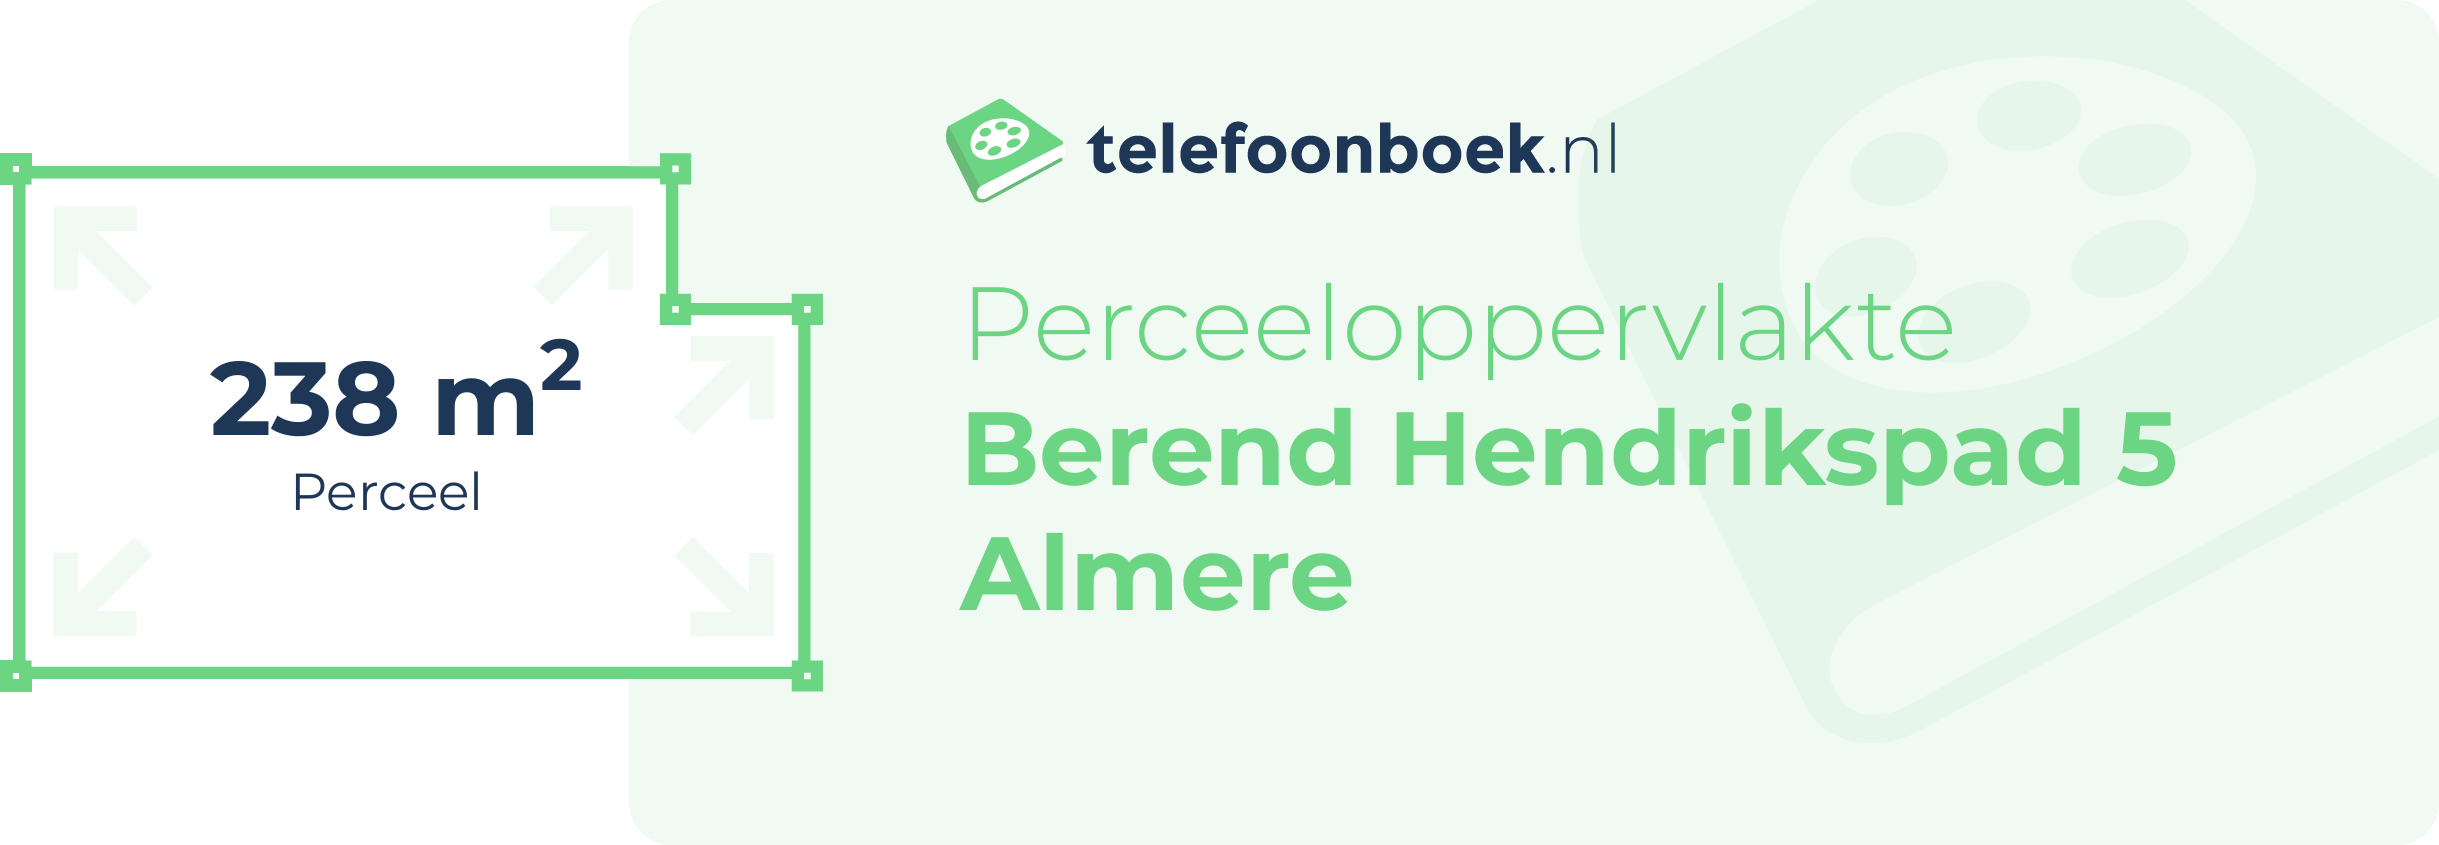 Perceeloppervlakte Berend Hendrikspad 5 Almere